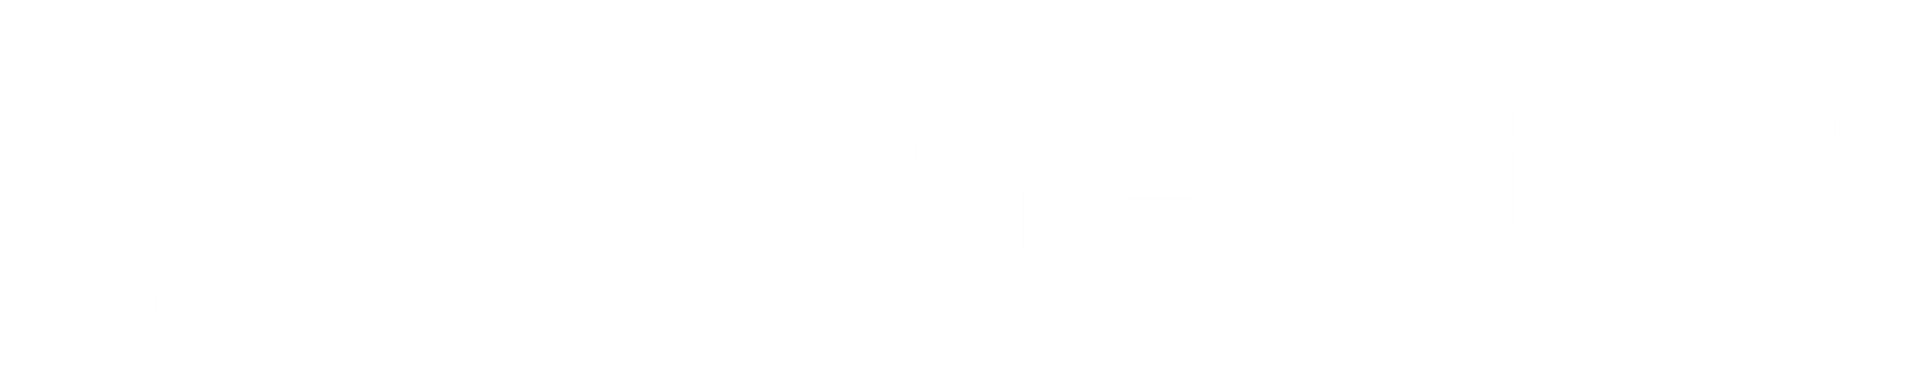 Earth Protex Colored Horizontal White